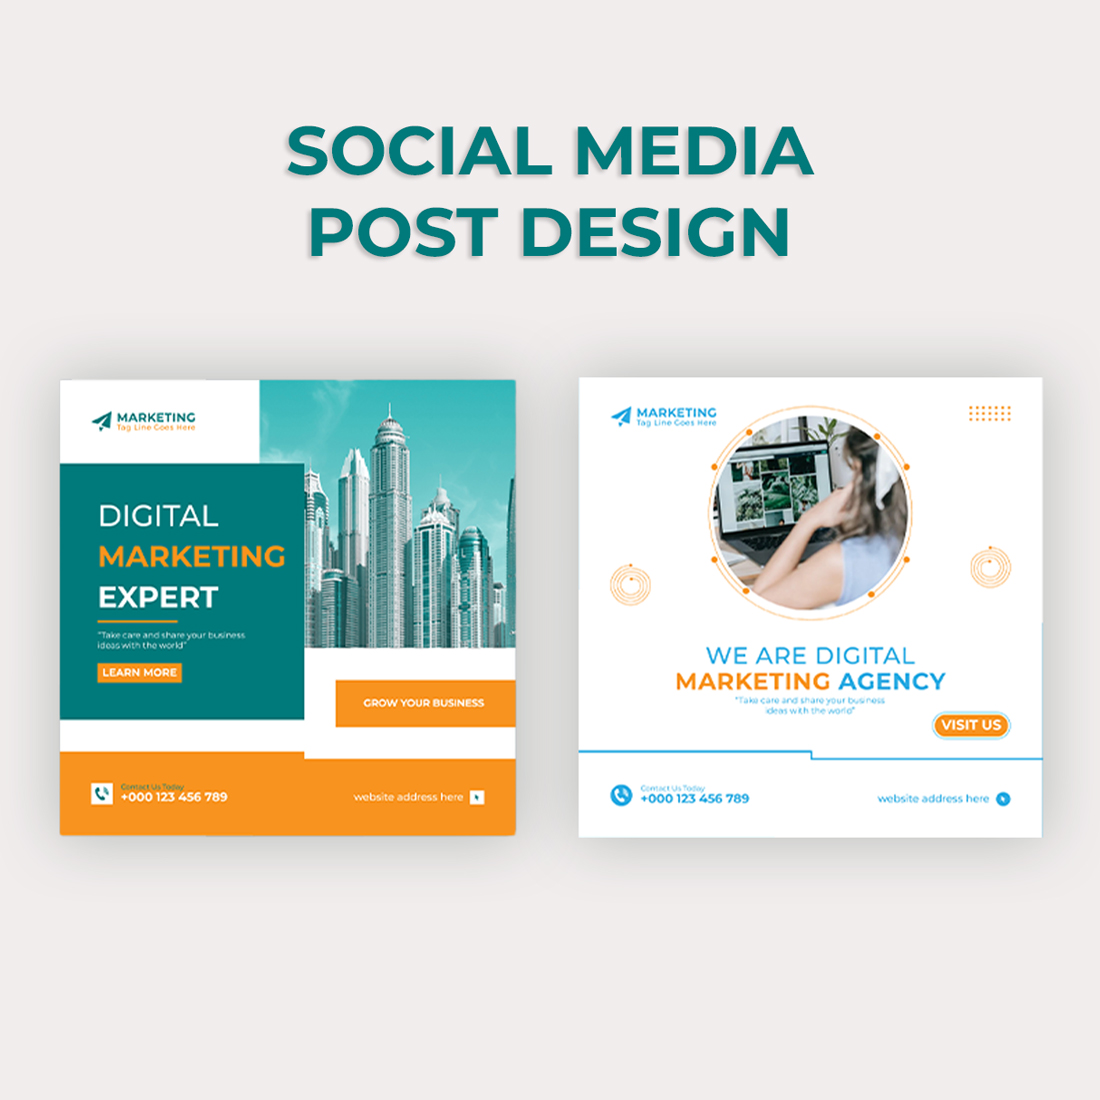 Digital marketing Social Media Post Design cover image.